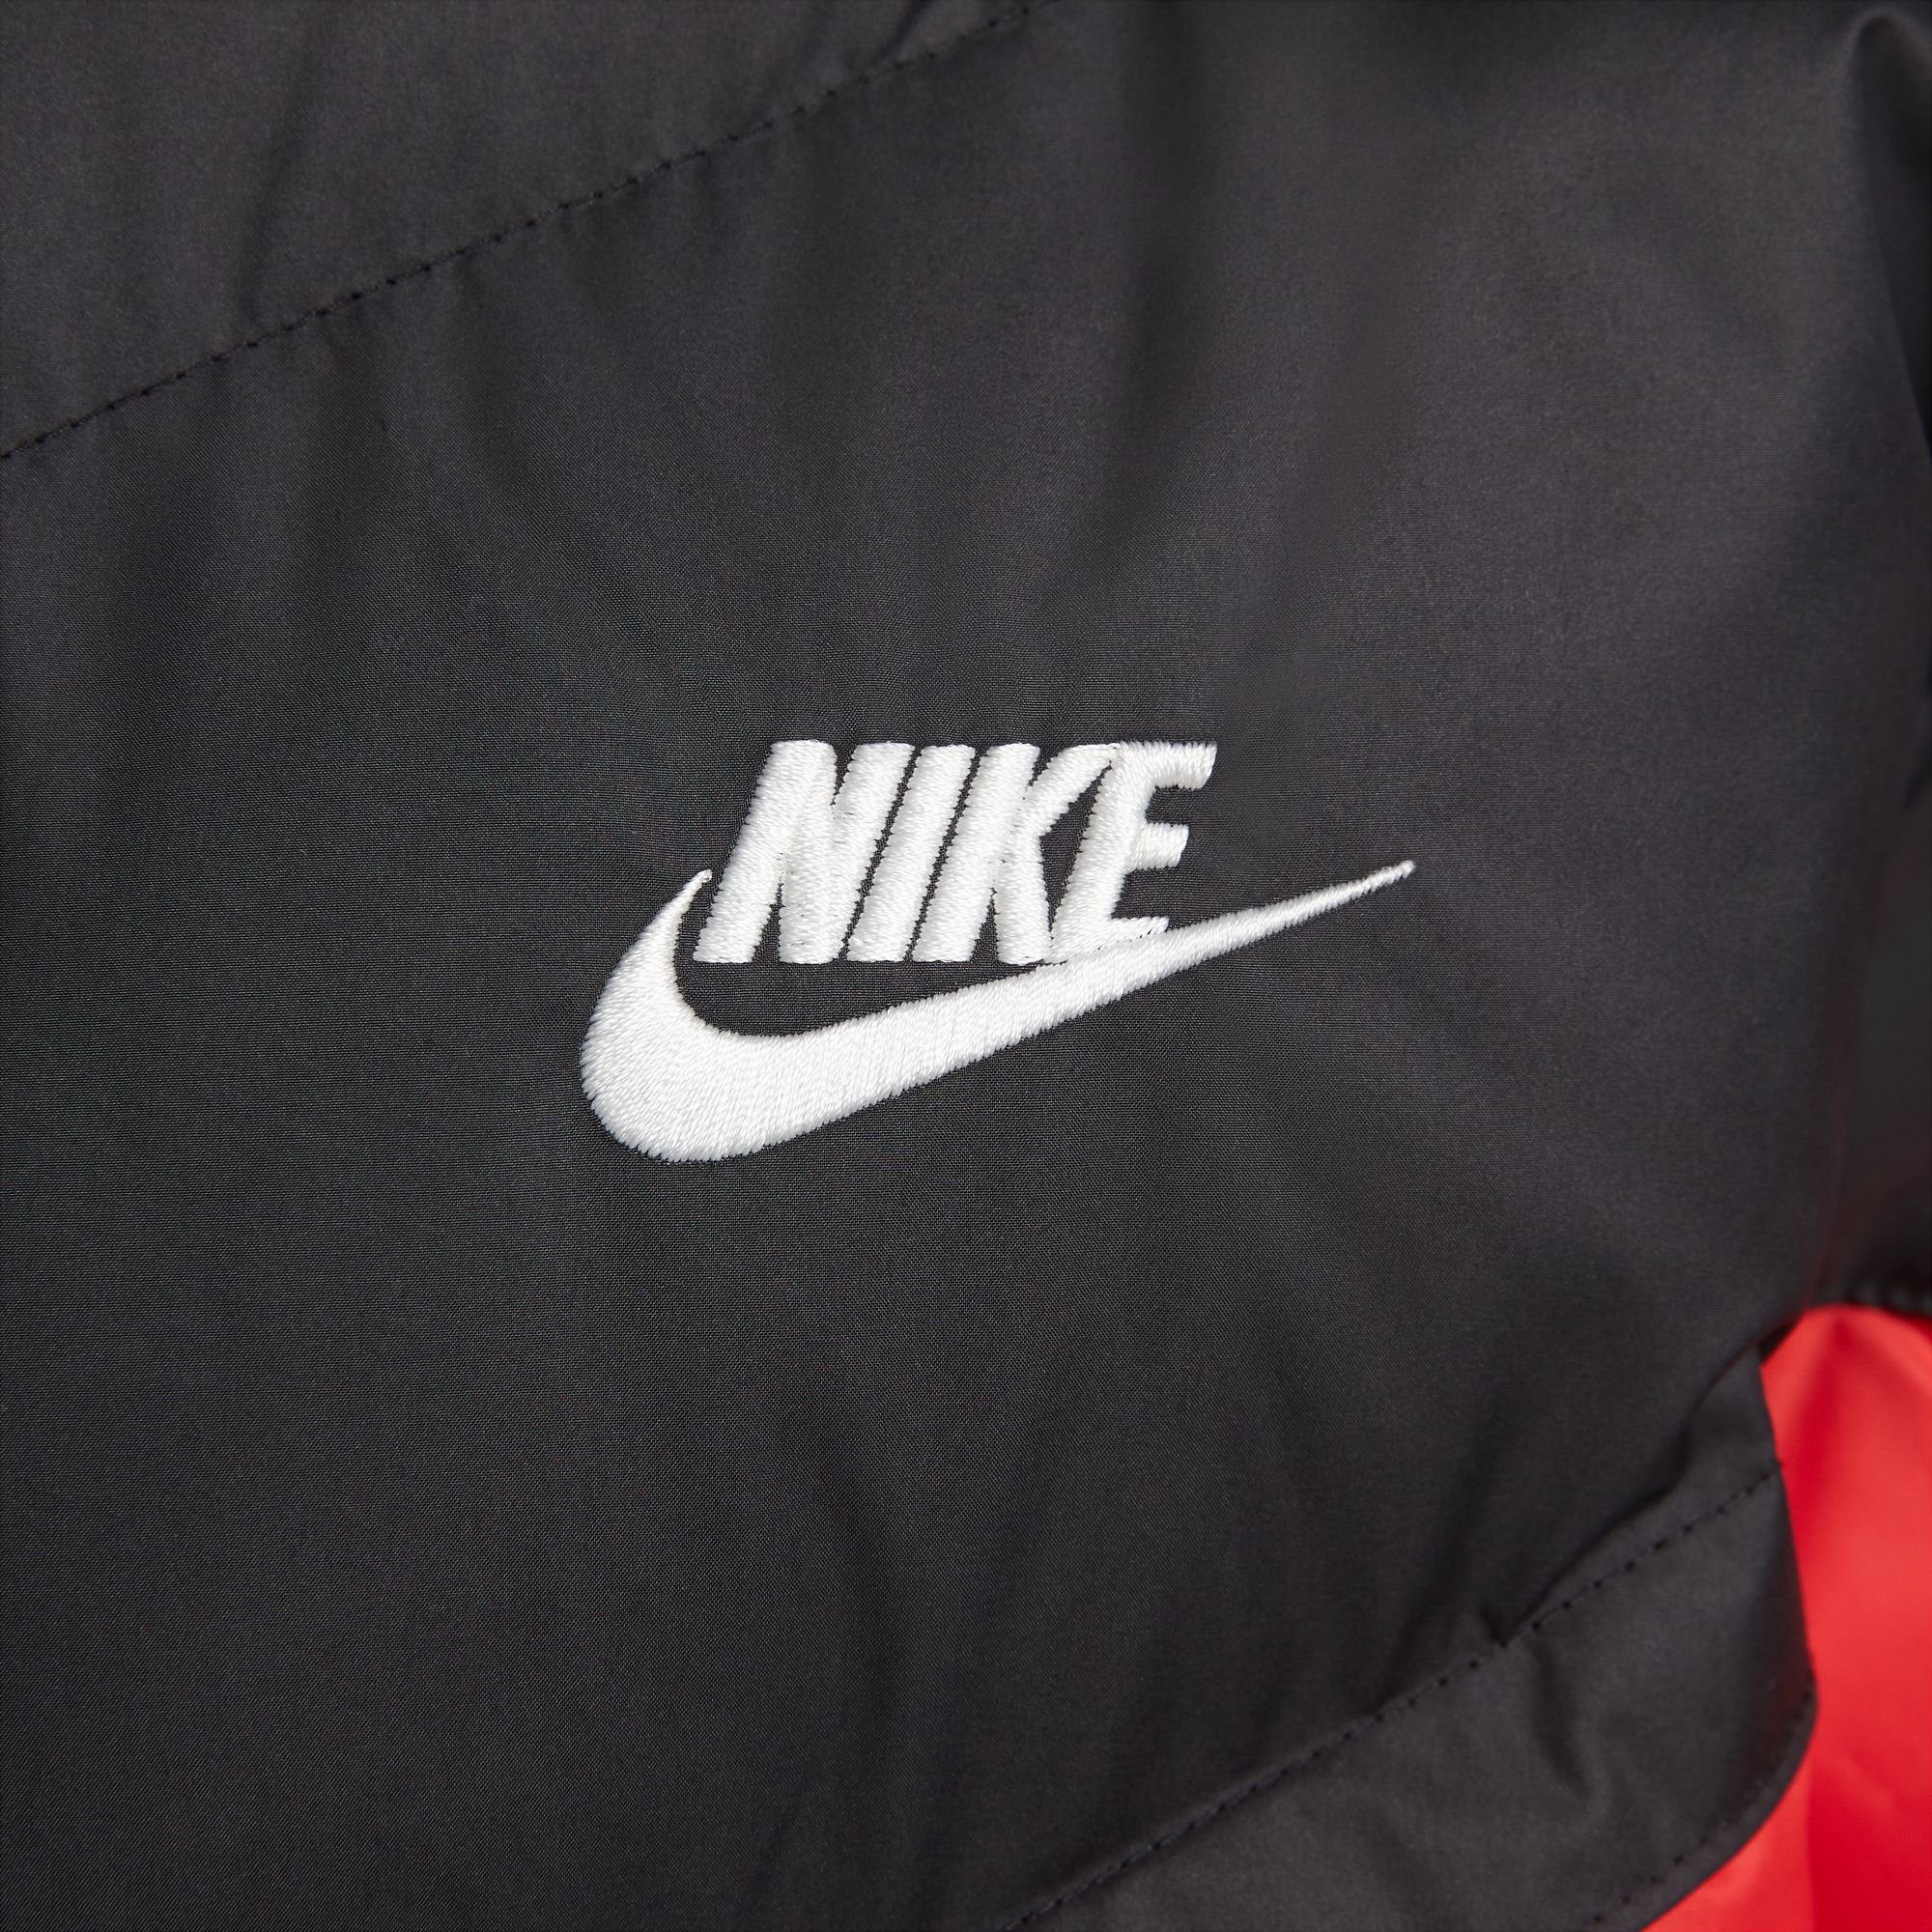 STORM-FIT BLACK/UNIVERSITY Windbreaker JACKET Nike WINDRUNNER RED/SAIL INSULATED MEN'S Sportswear HOODED